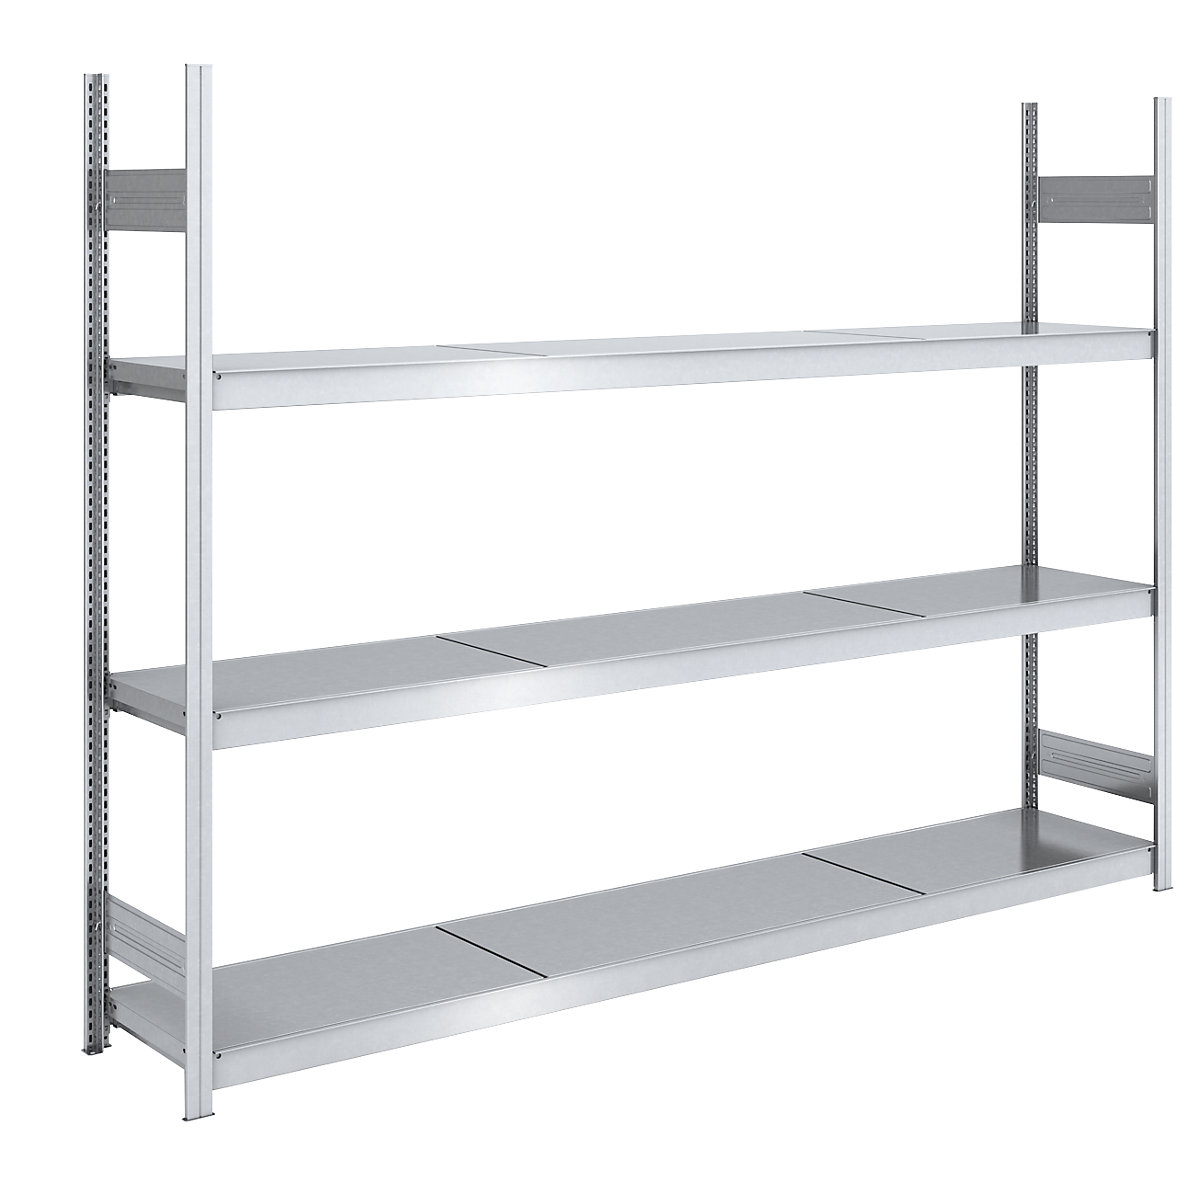 Wide span boltless shelving unit with steel shelves – hofe, height 2000 mm, shelf width 2500 mm, shelf depth 500 mm, standard shelf unit